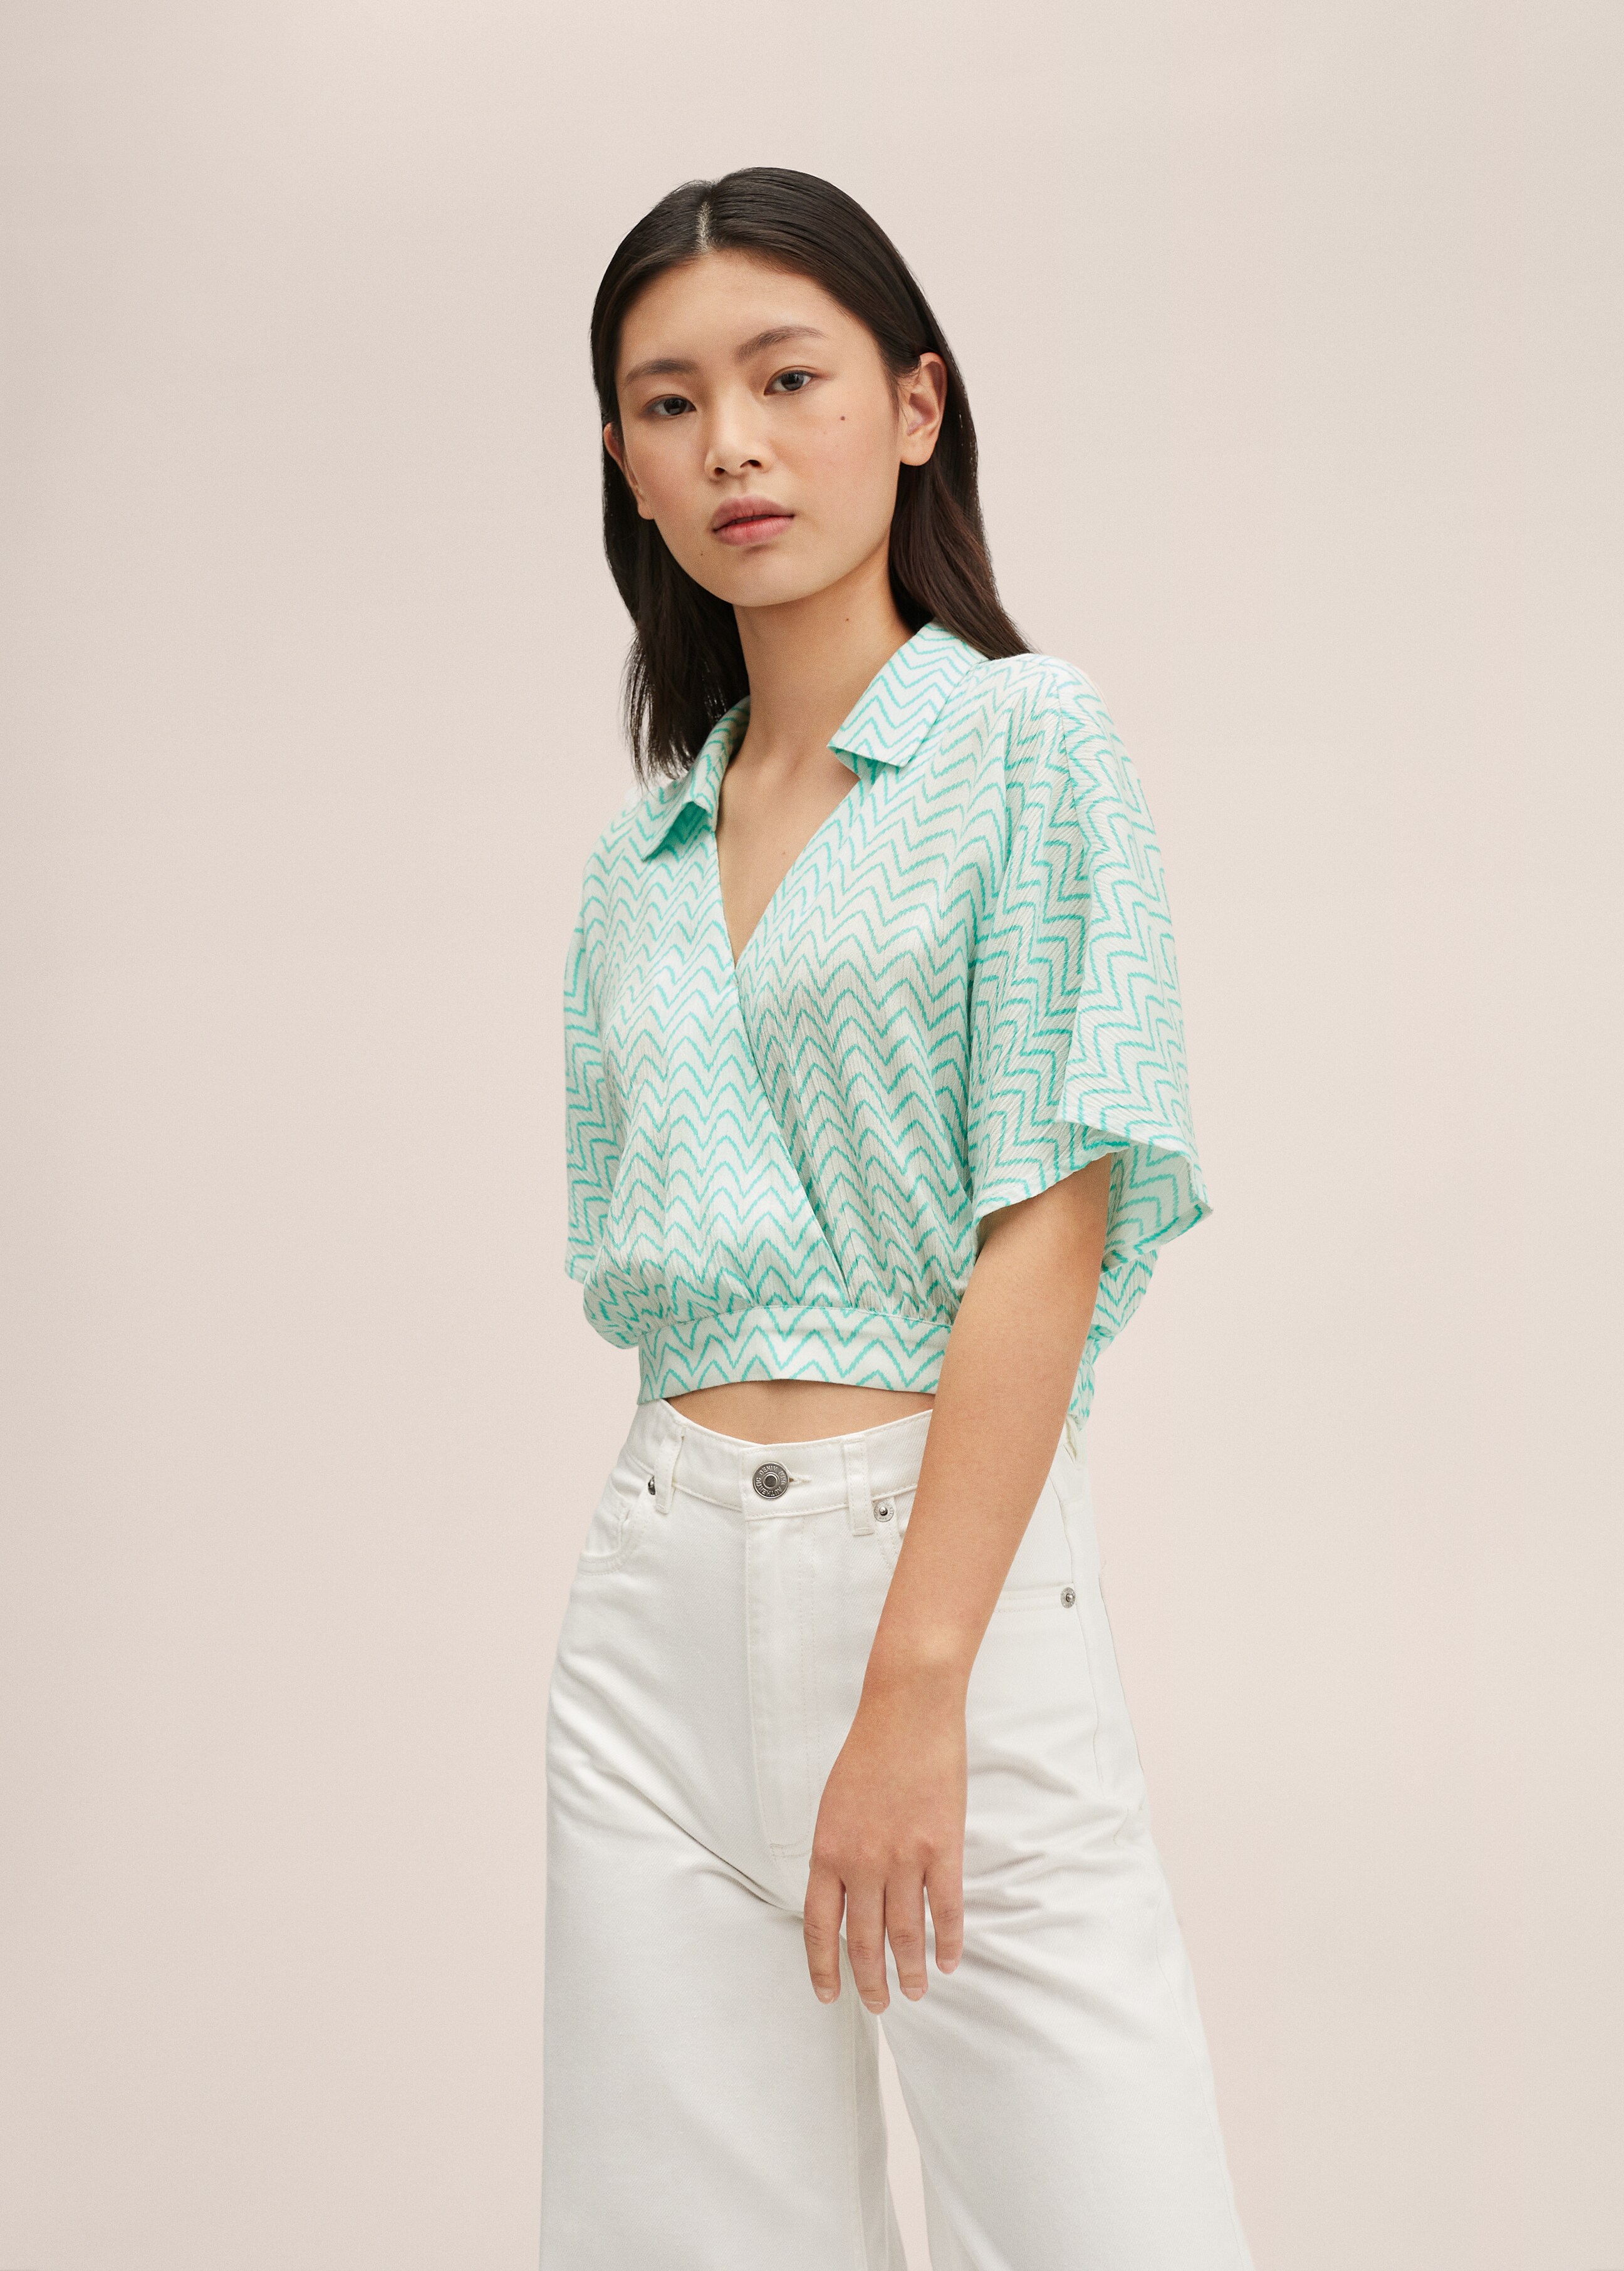 Printed crop blouse - Medium plane